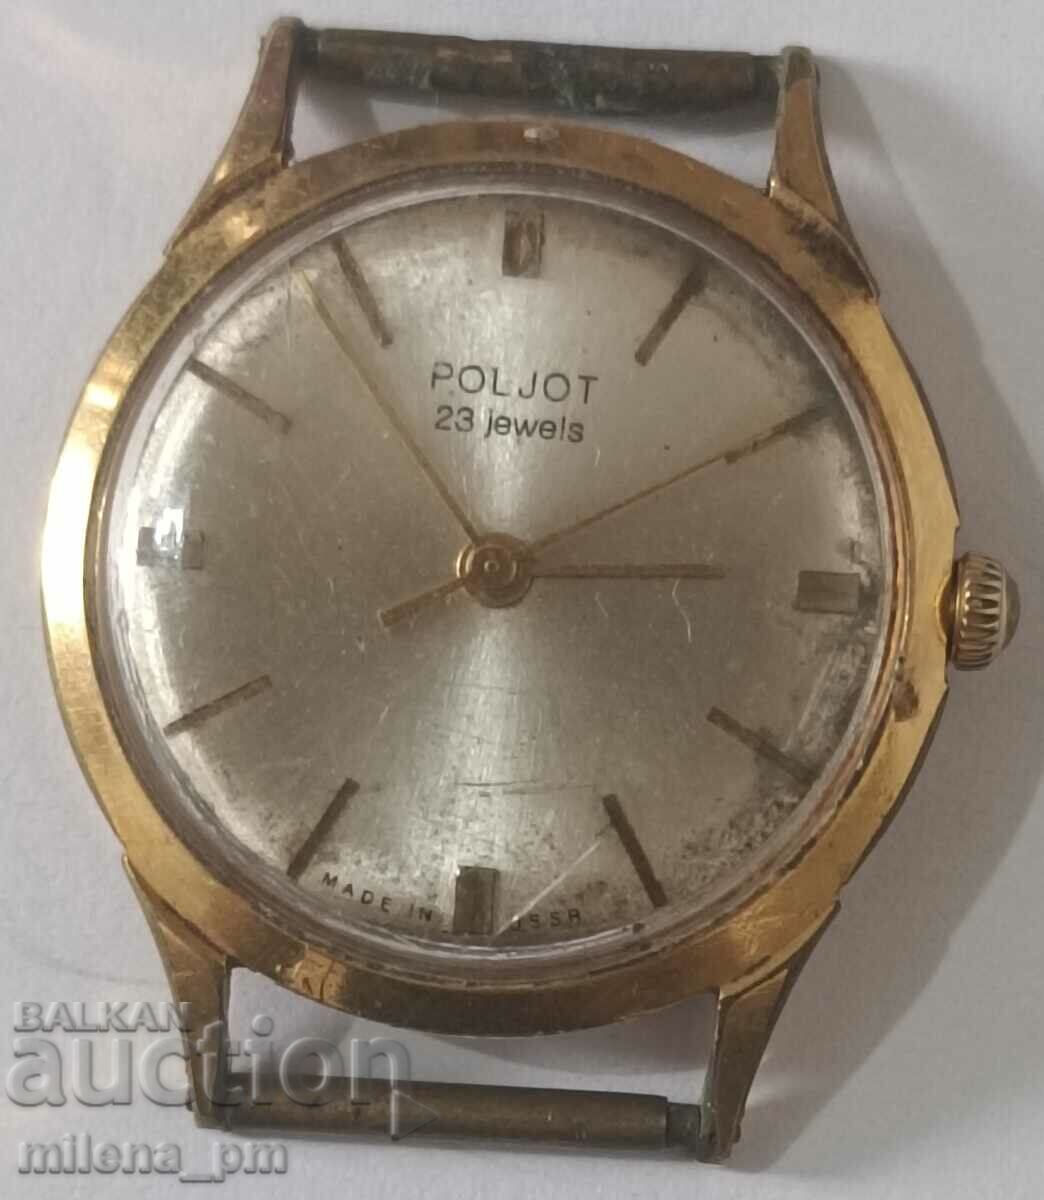 Gold-plated Poljot wristwatch